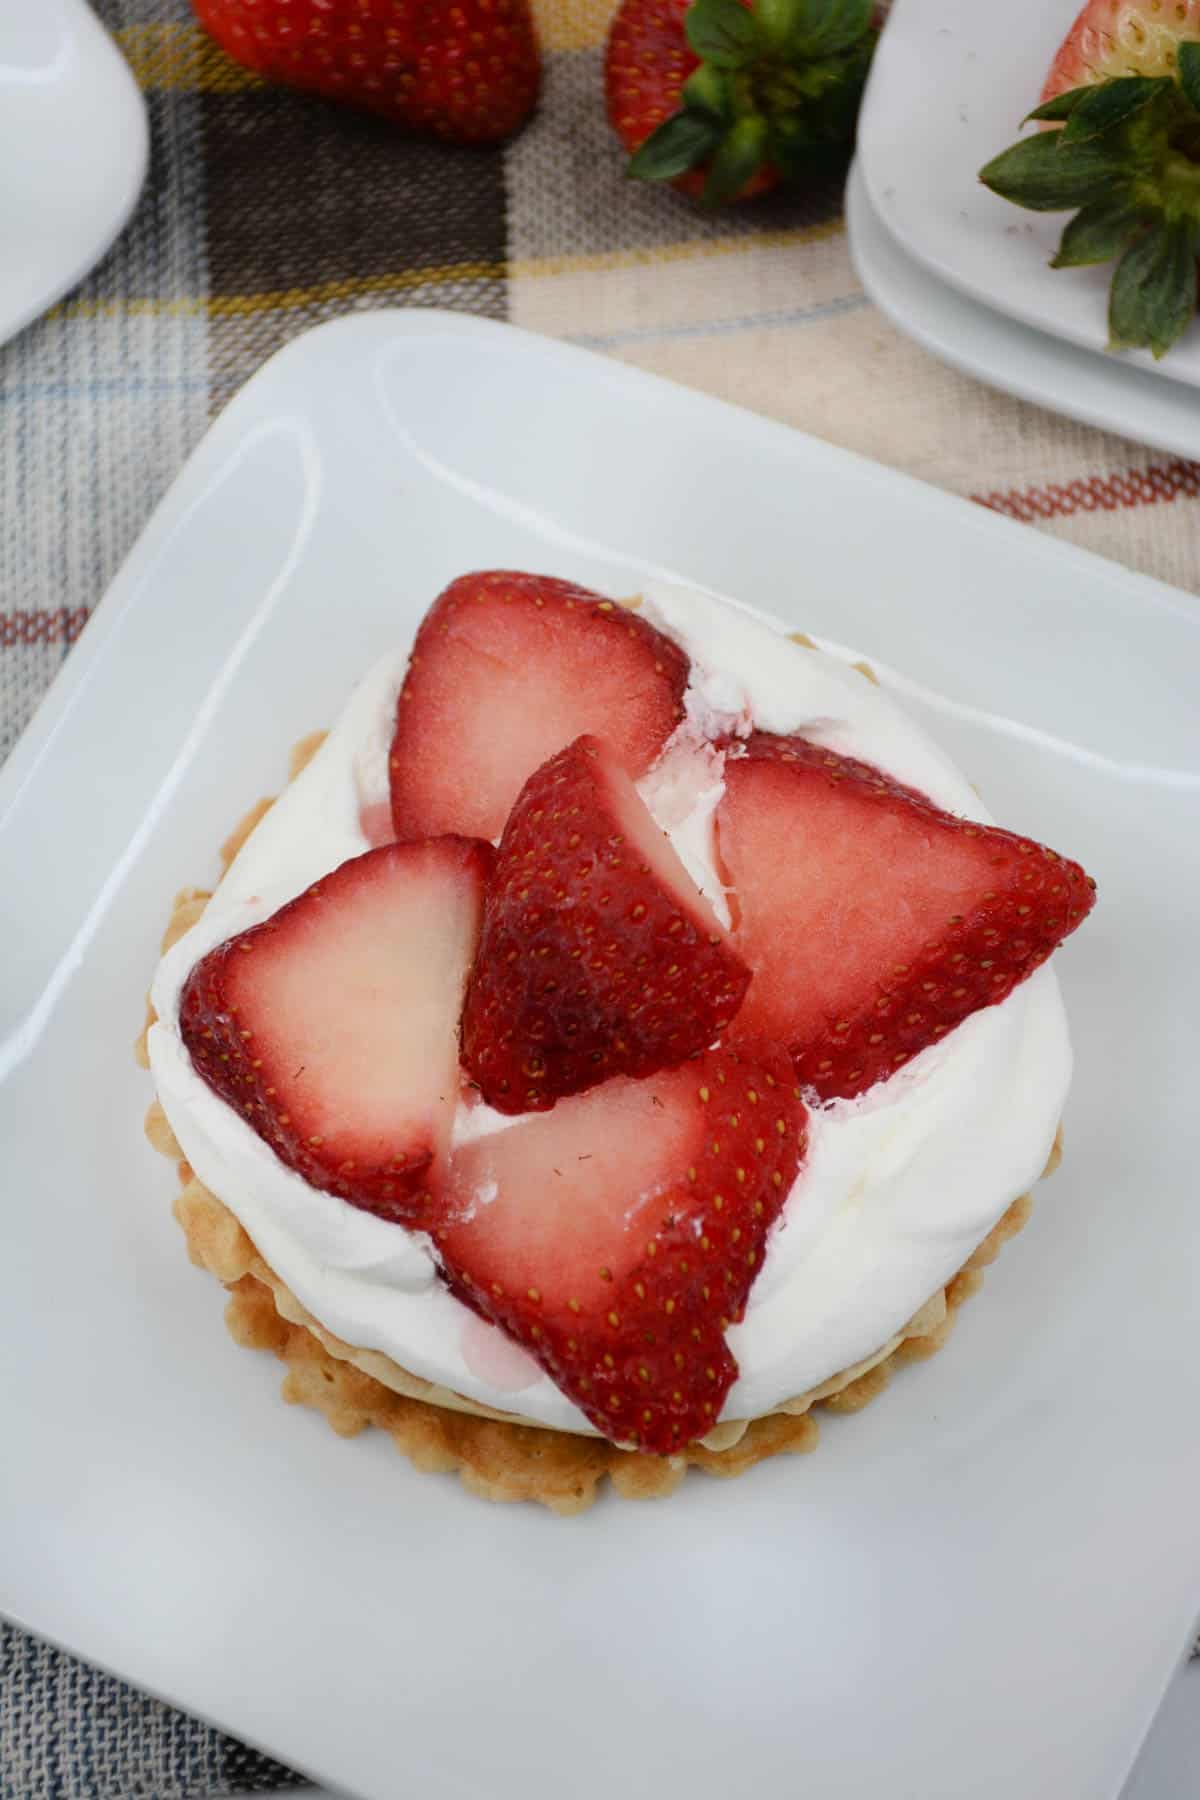 Strawberry Delight Dessert